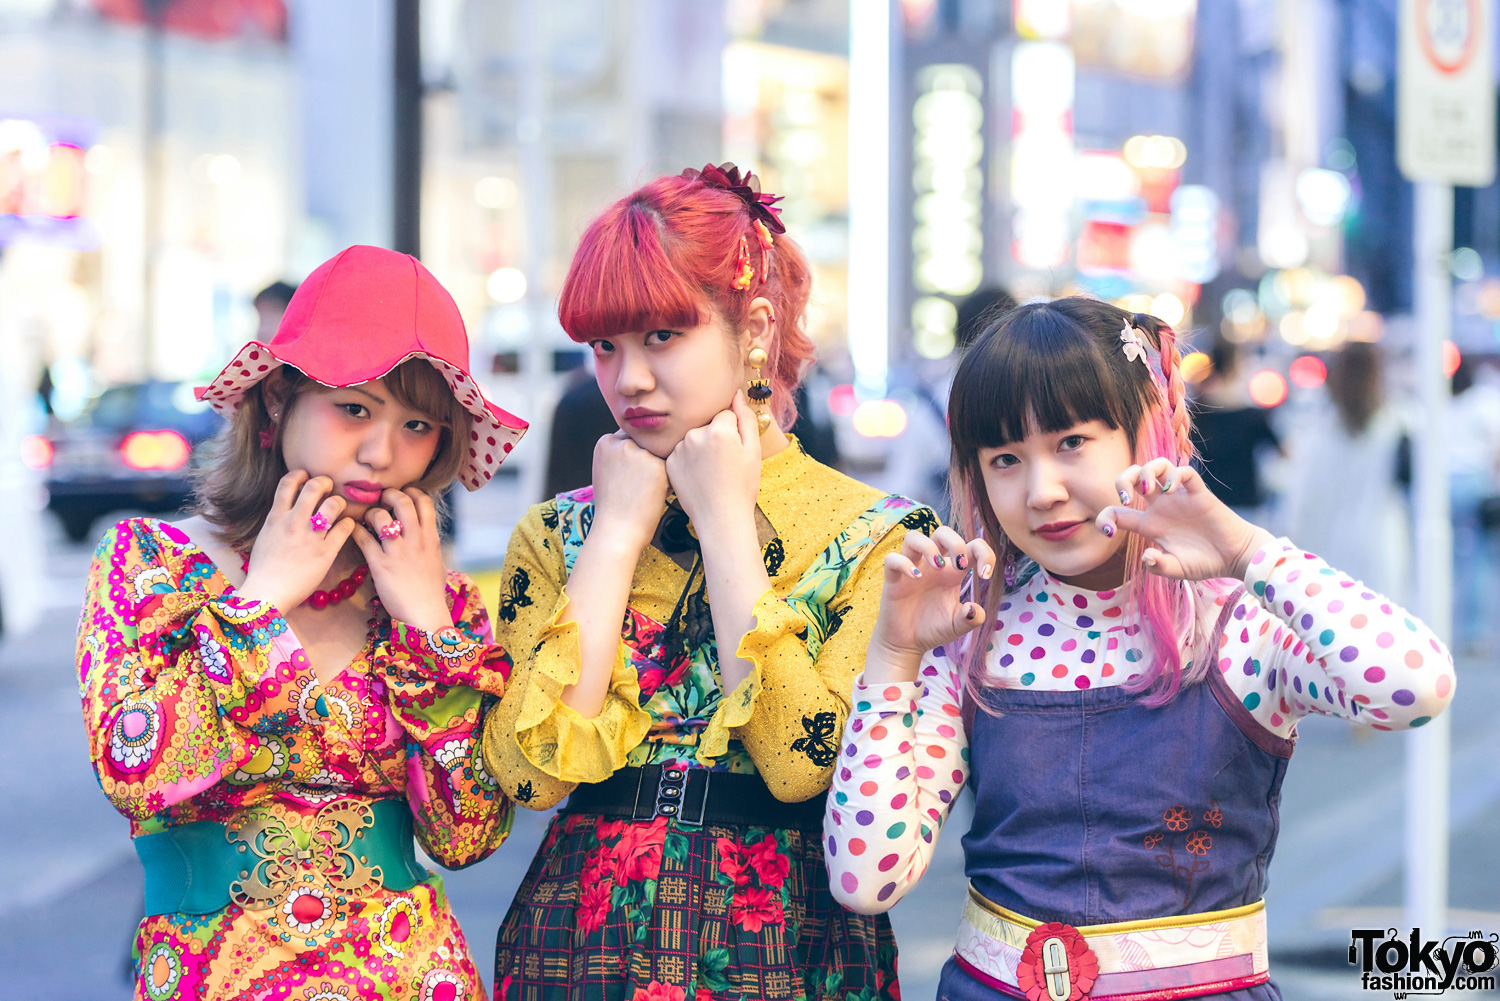 Harajuku Girls in Colorful Vintage Mixed Prints & Layered Fashion w ...